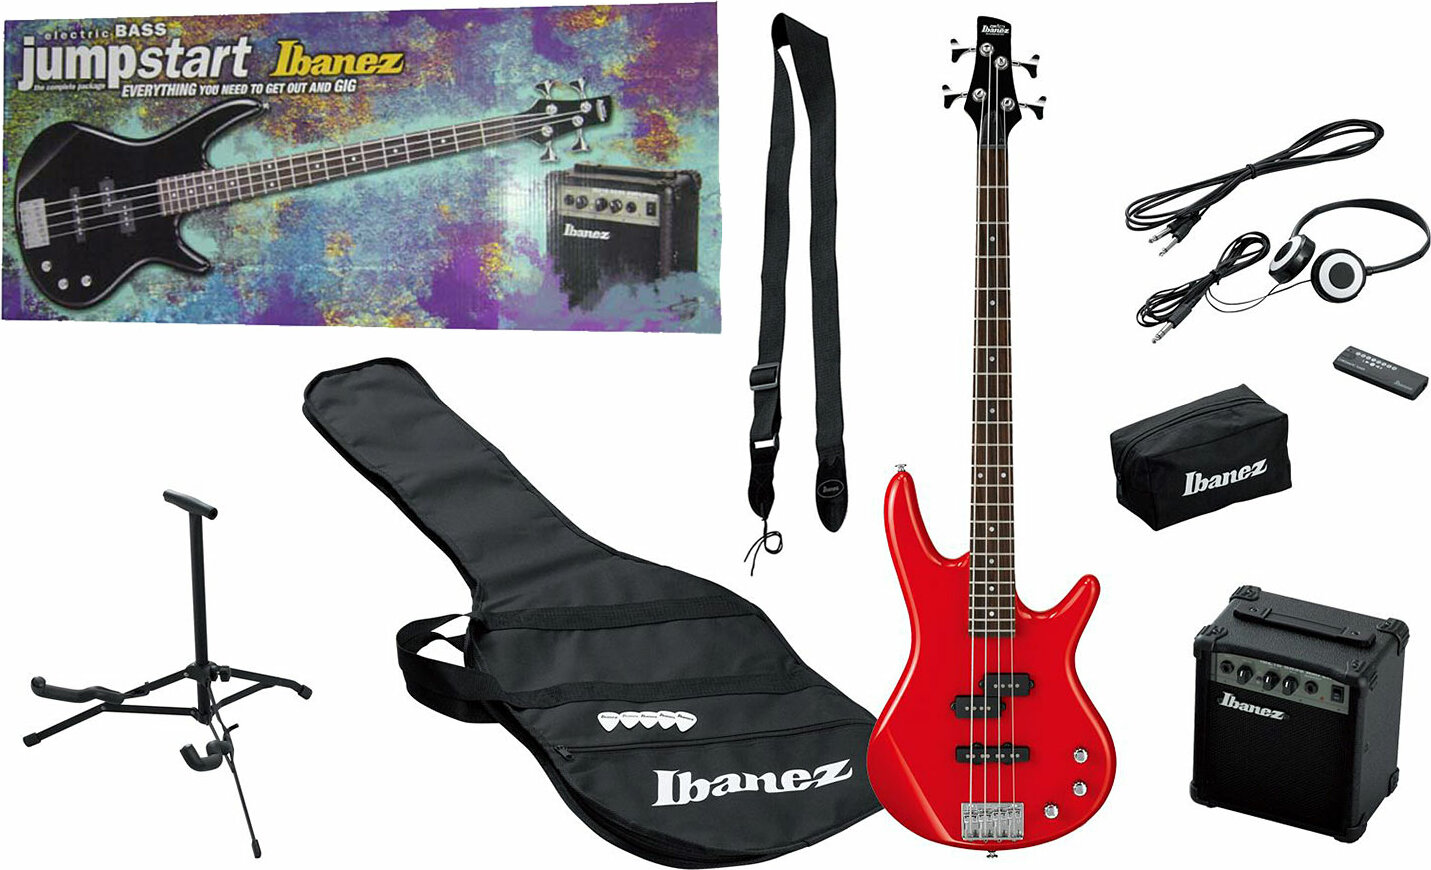 Ibanez Ijsr190 Rd Jumpstart Guitar Package - Red - Elektrische bas set - Main picture